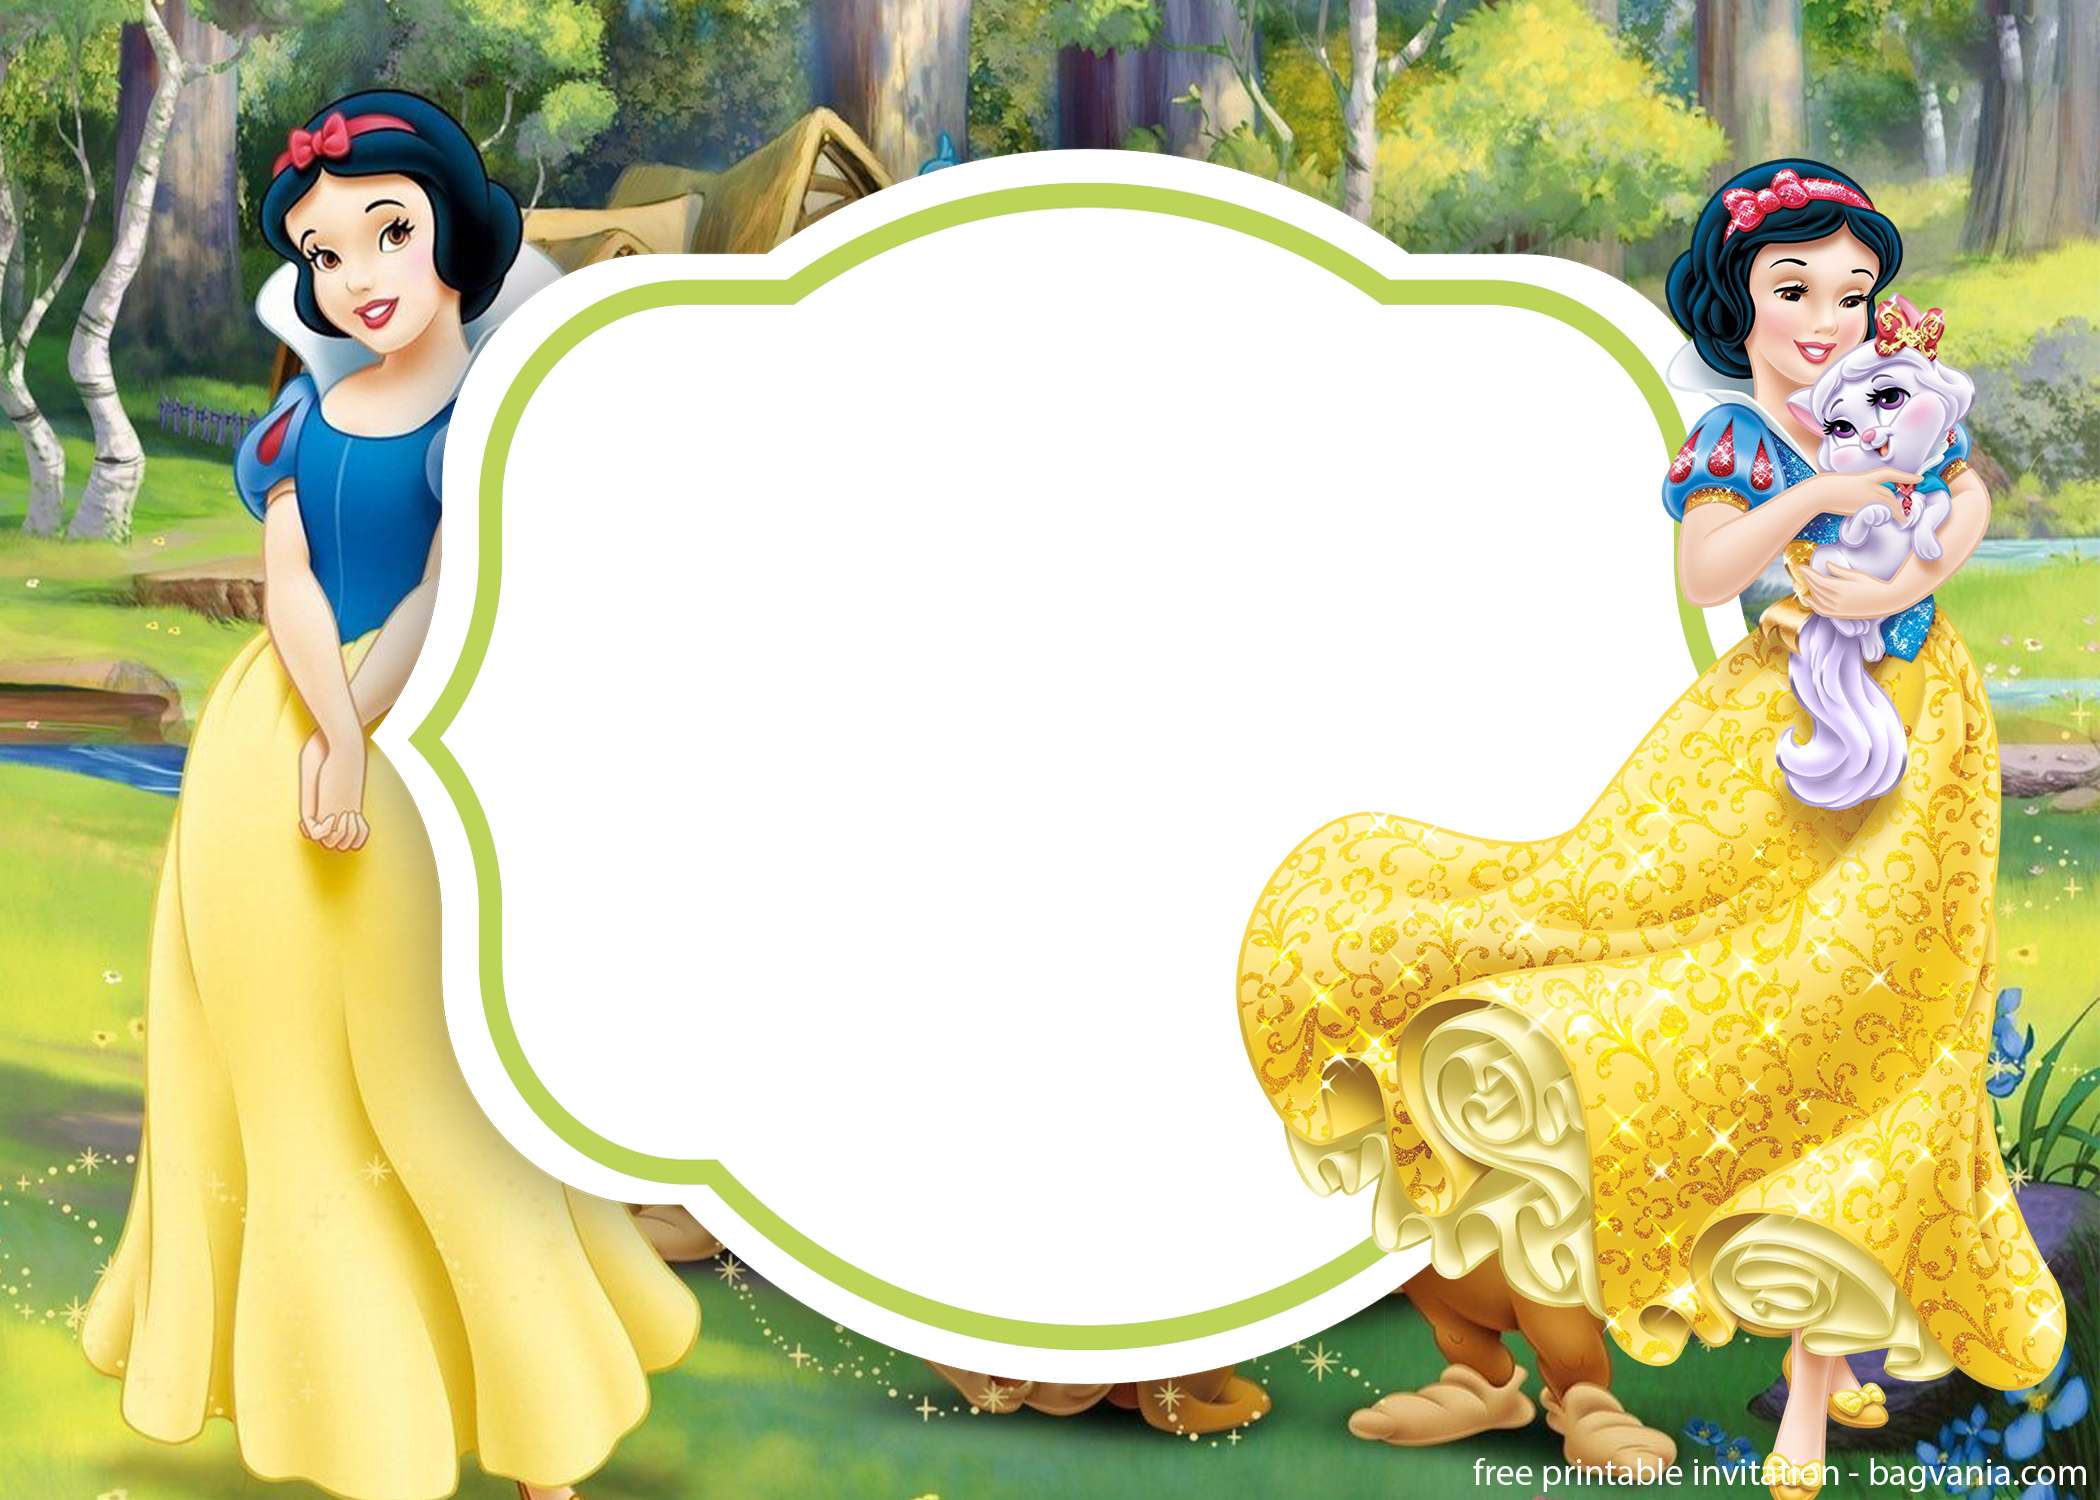 Snow White Invitations Free Printable - FREE PRINTABLE TEMPLATES